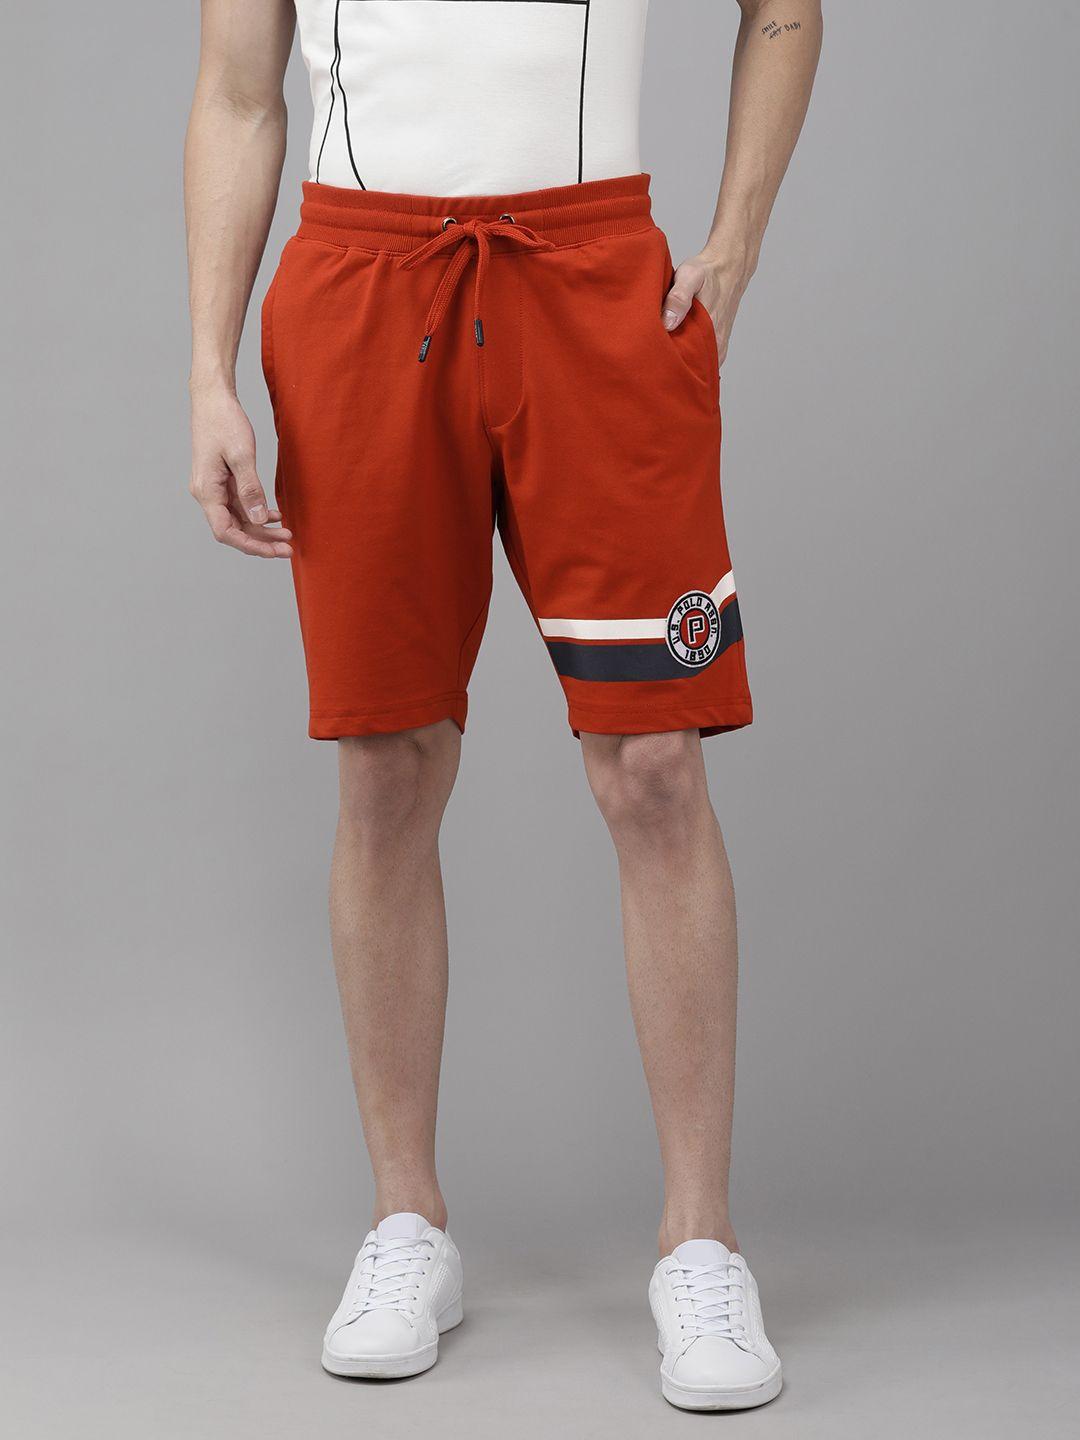 u s polo assn denim co men red brand logo printed applique printed shorts